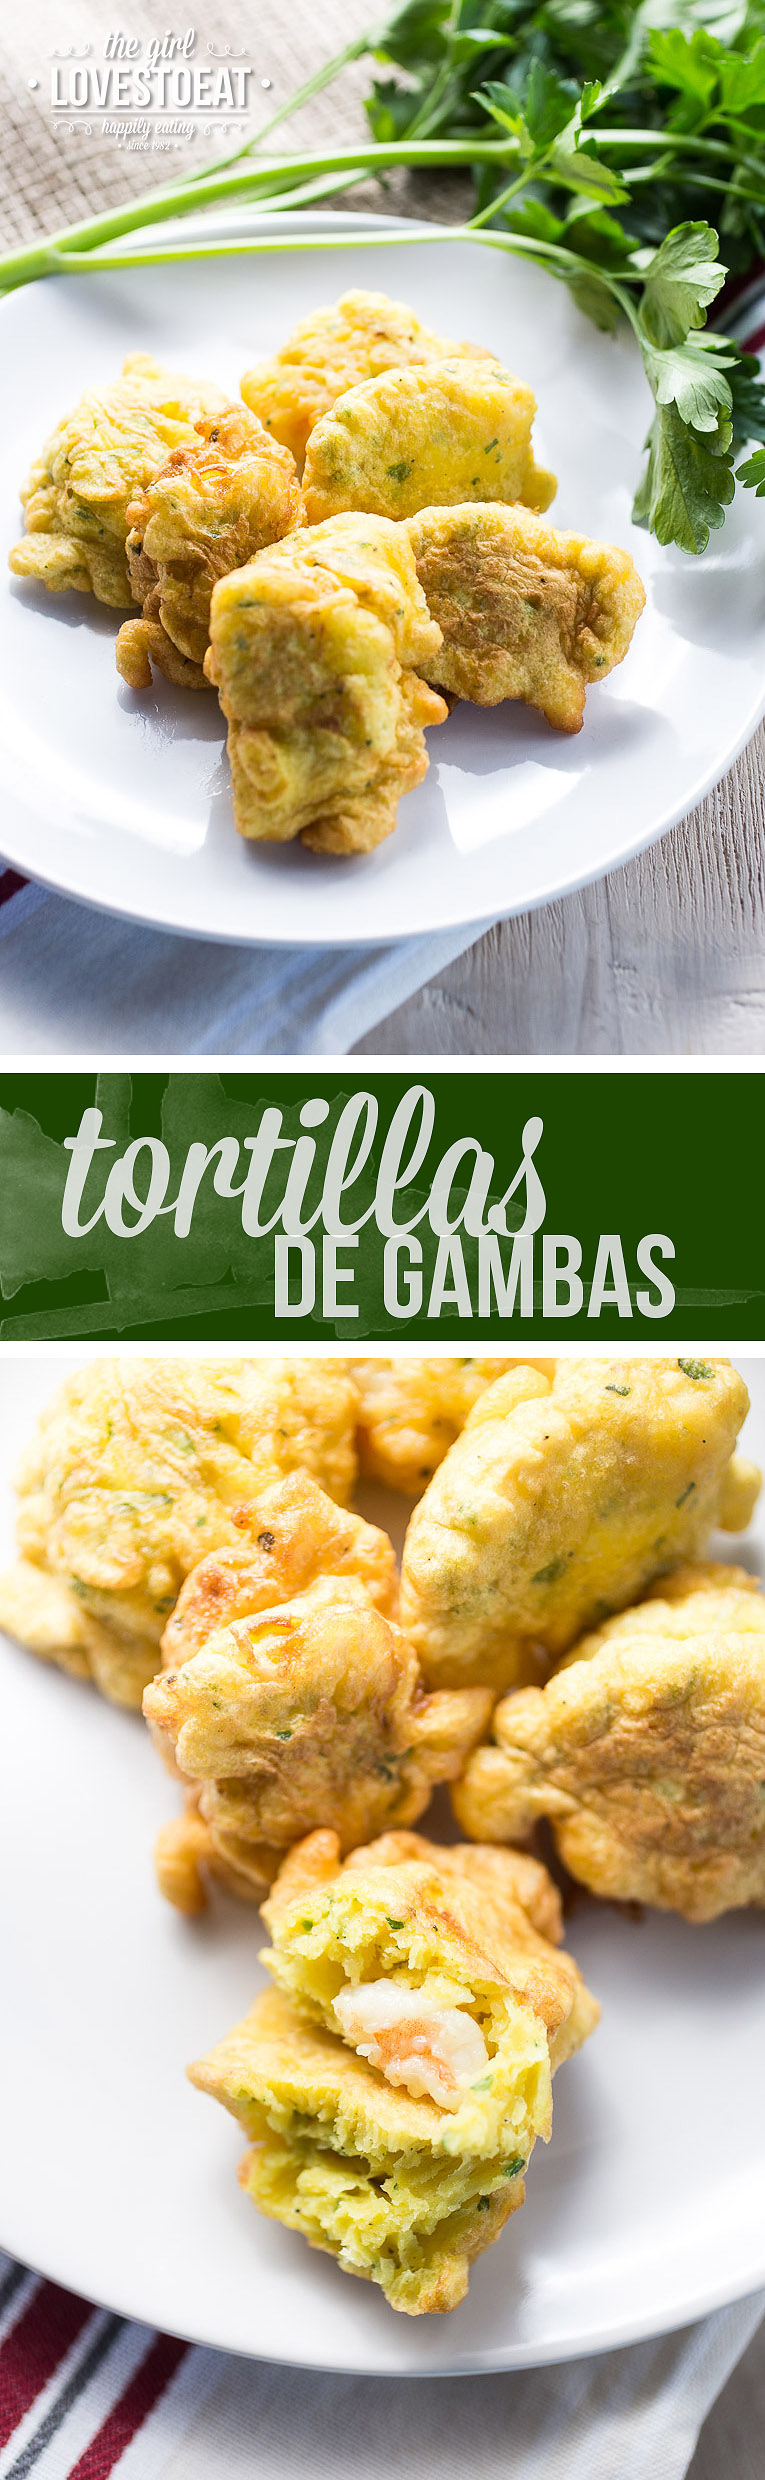 Tortillas de gambas - Spanish shrimp fritters